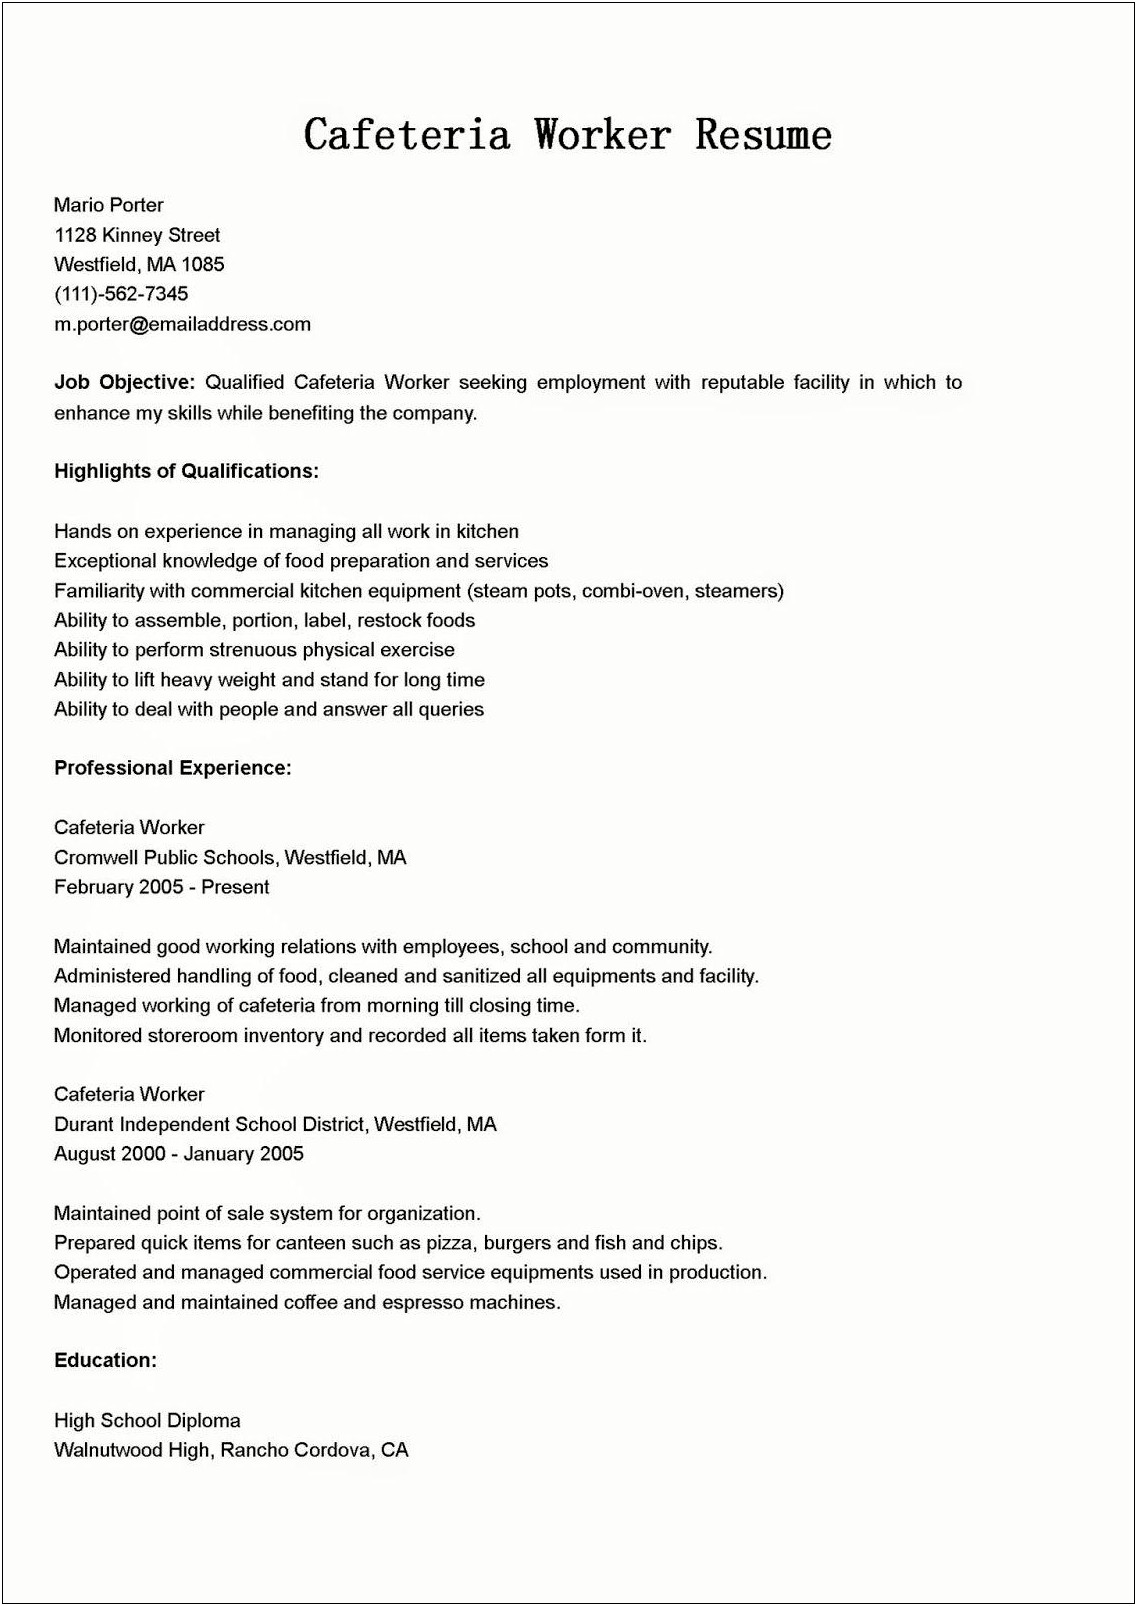 Sample Resume For School Cafeteria Worker